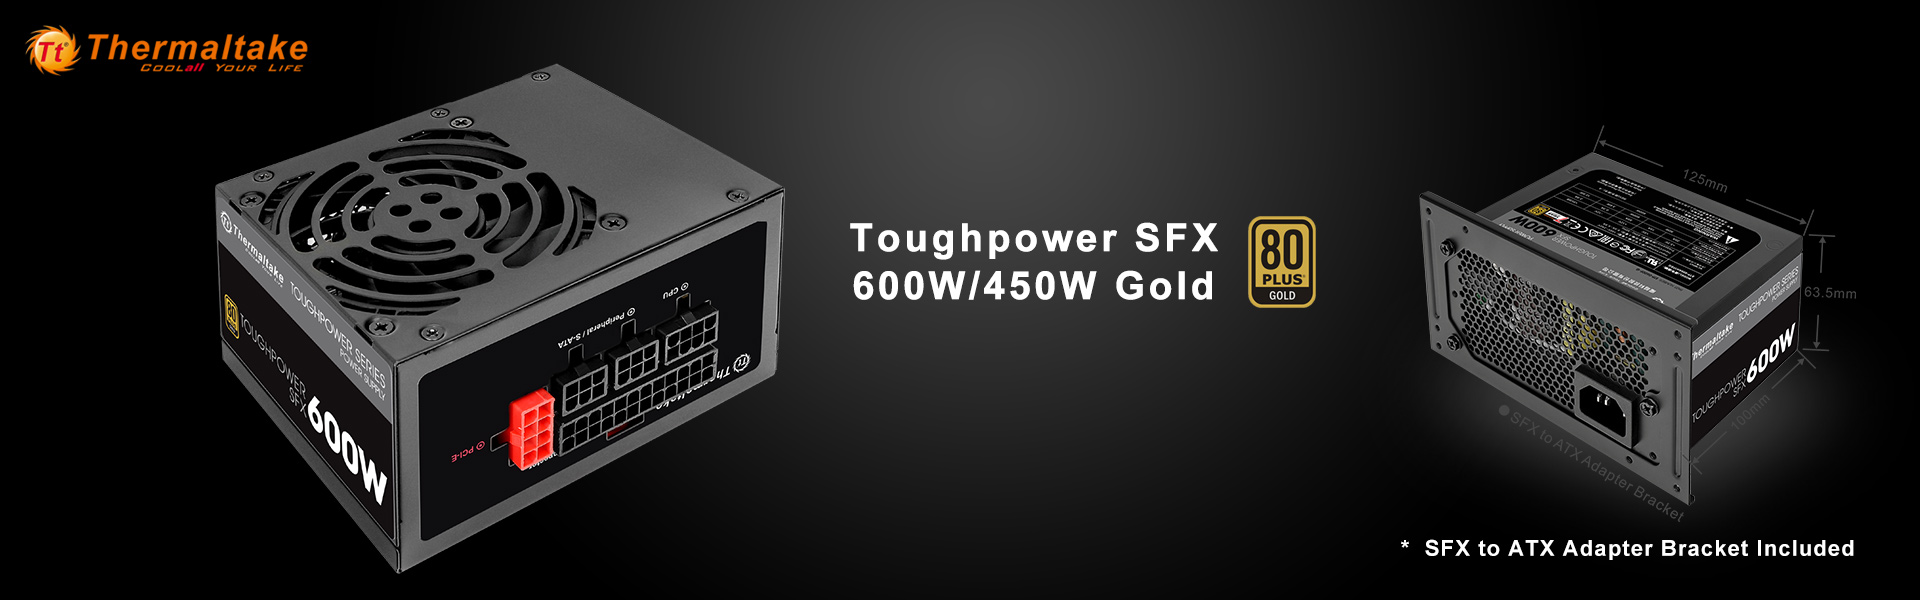 Thermaltake New Toughpower SFX Gold Series